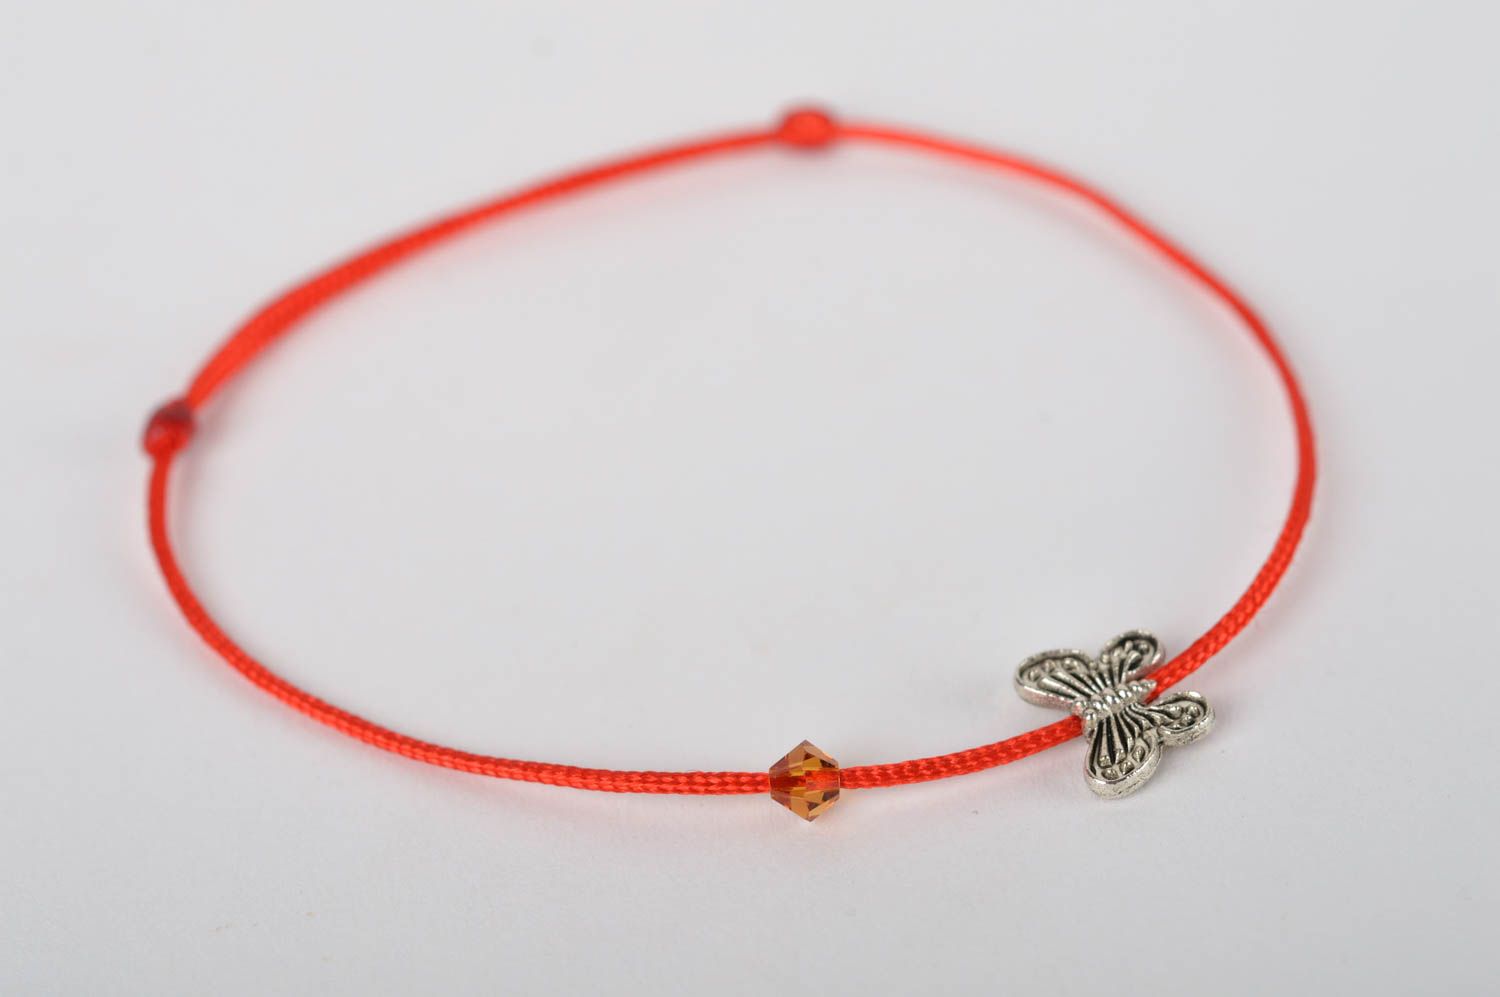 Unusual handmade thread bracelet fashion accessories artisan jewelry designs photo 2